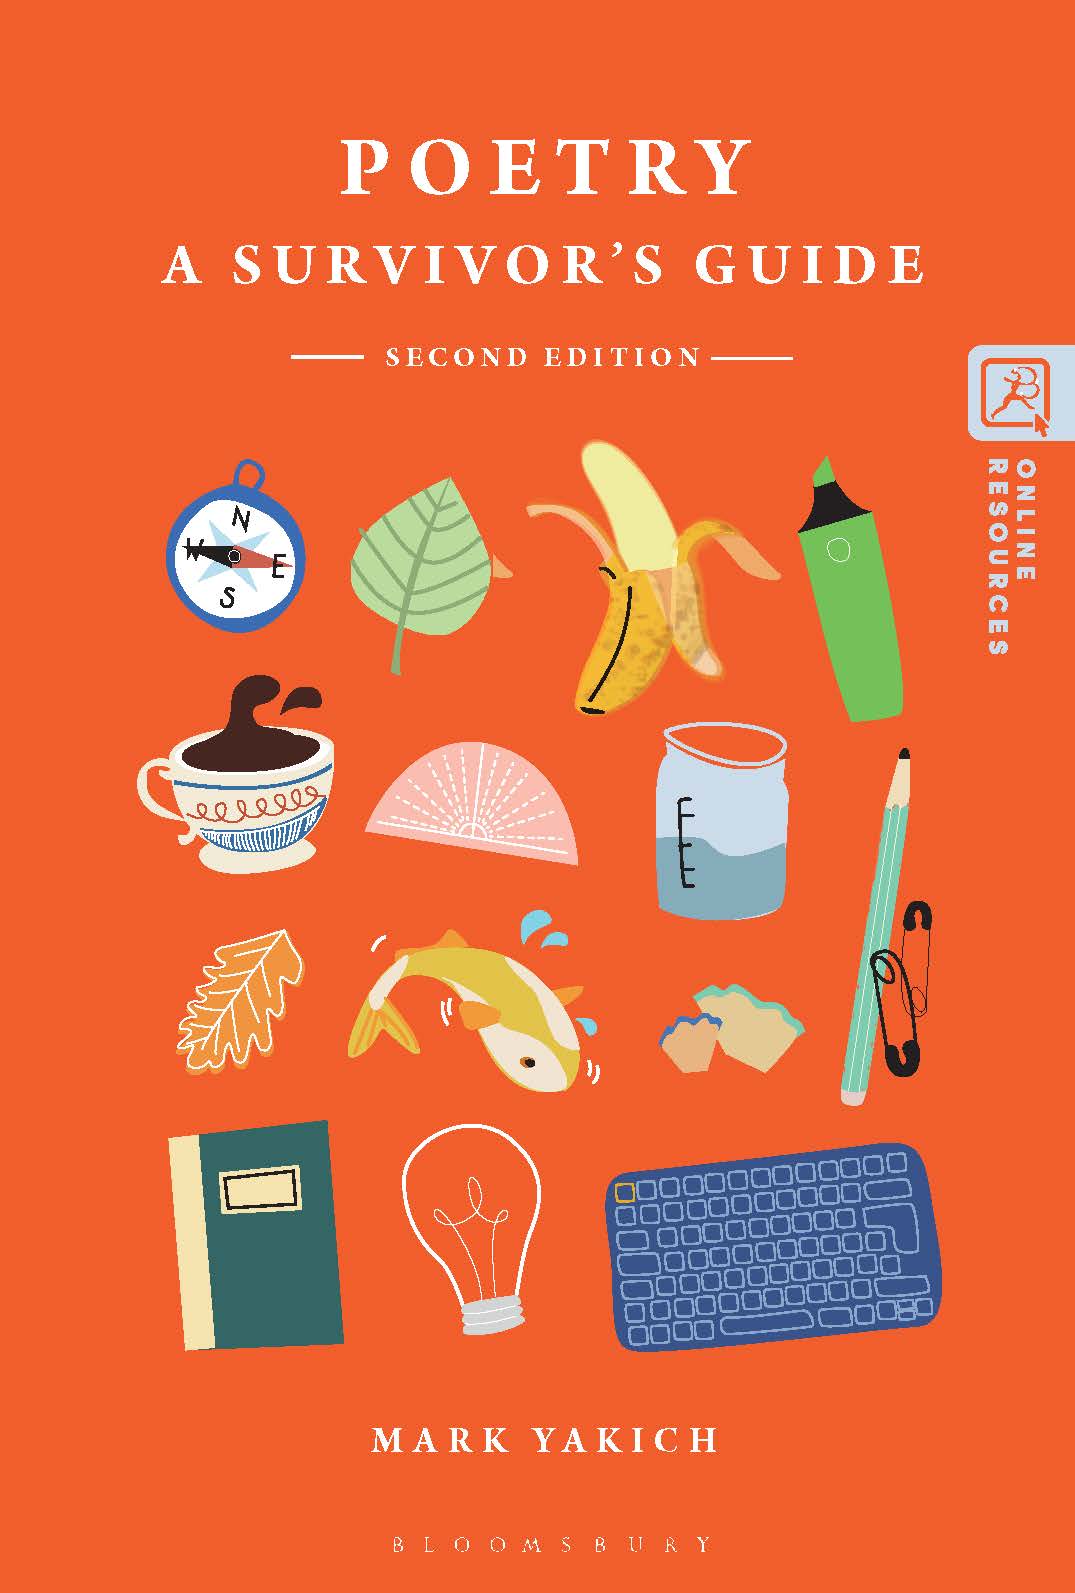 Poetry: A Survivor's Guide, Second Edition